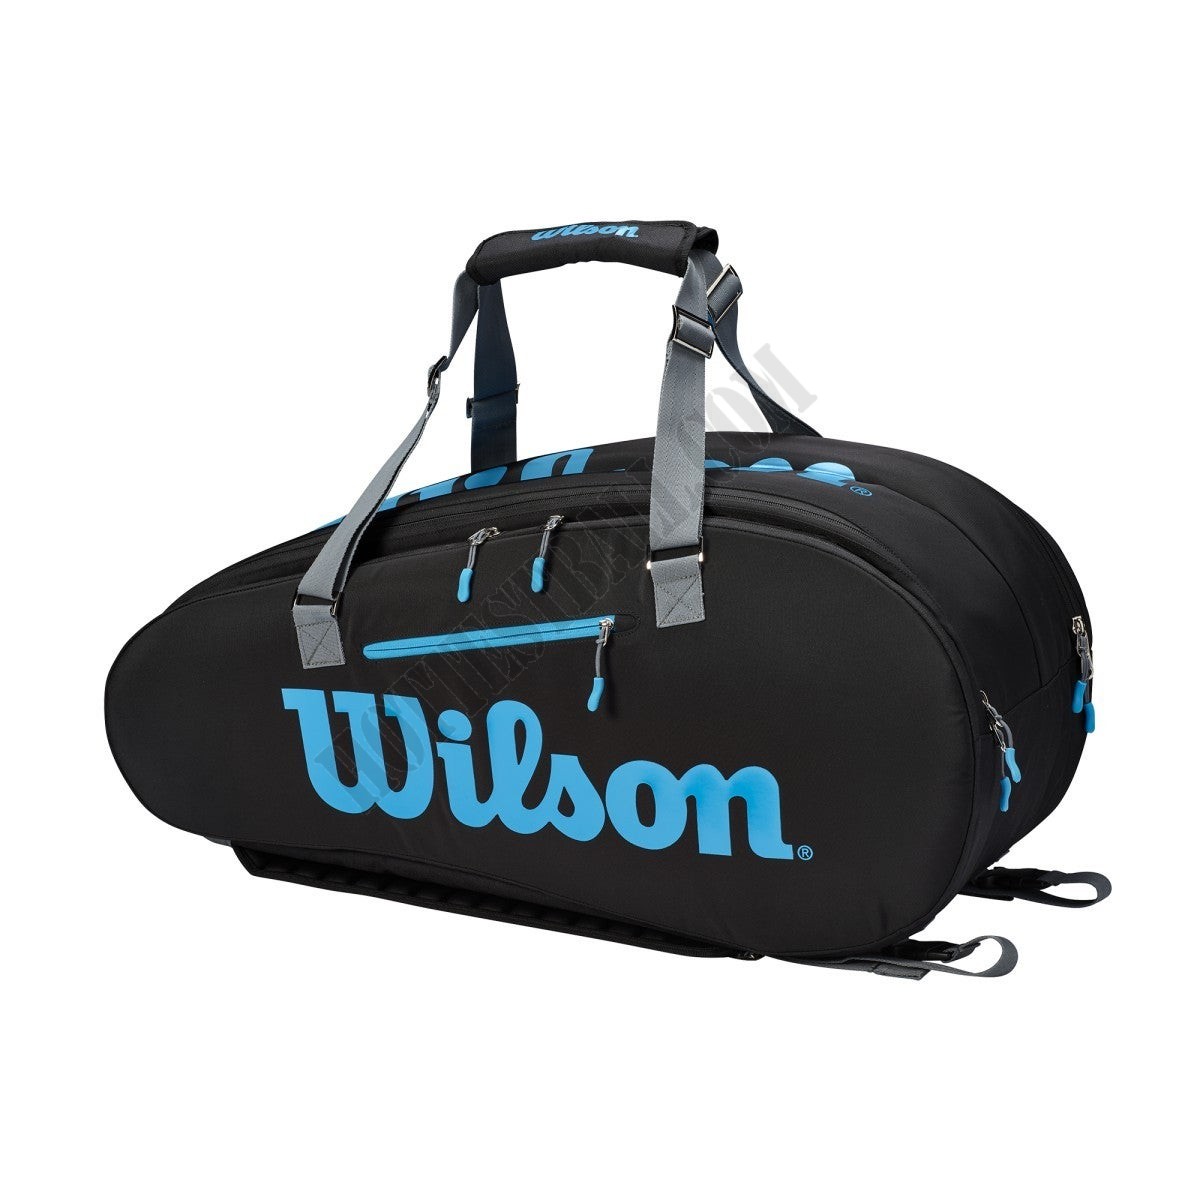 Ultra 9 Pack Bag - Wilson Discount Store - Ultra 9 Pack Bag - Wilson Discount Store